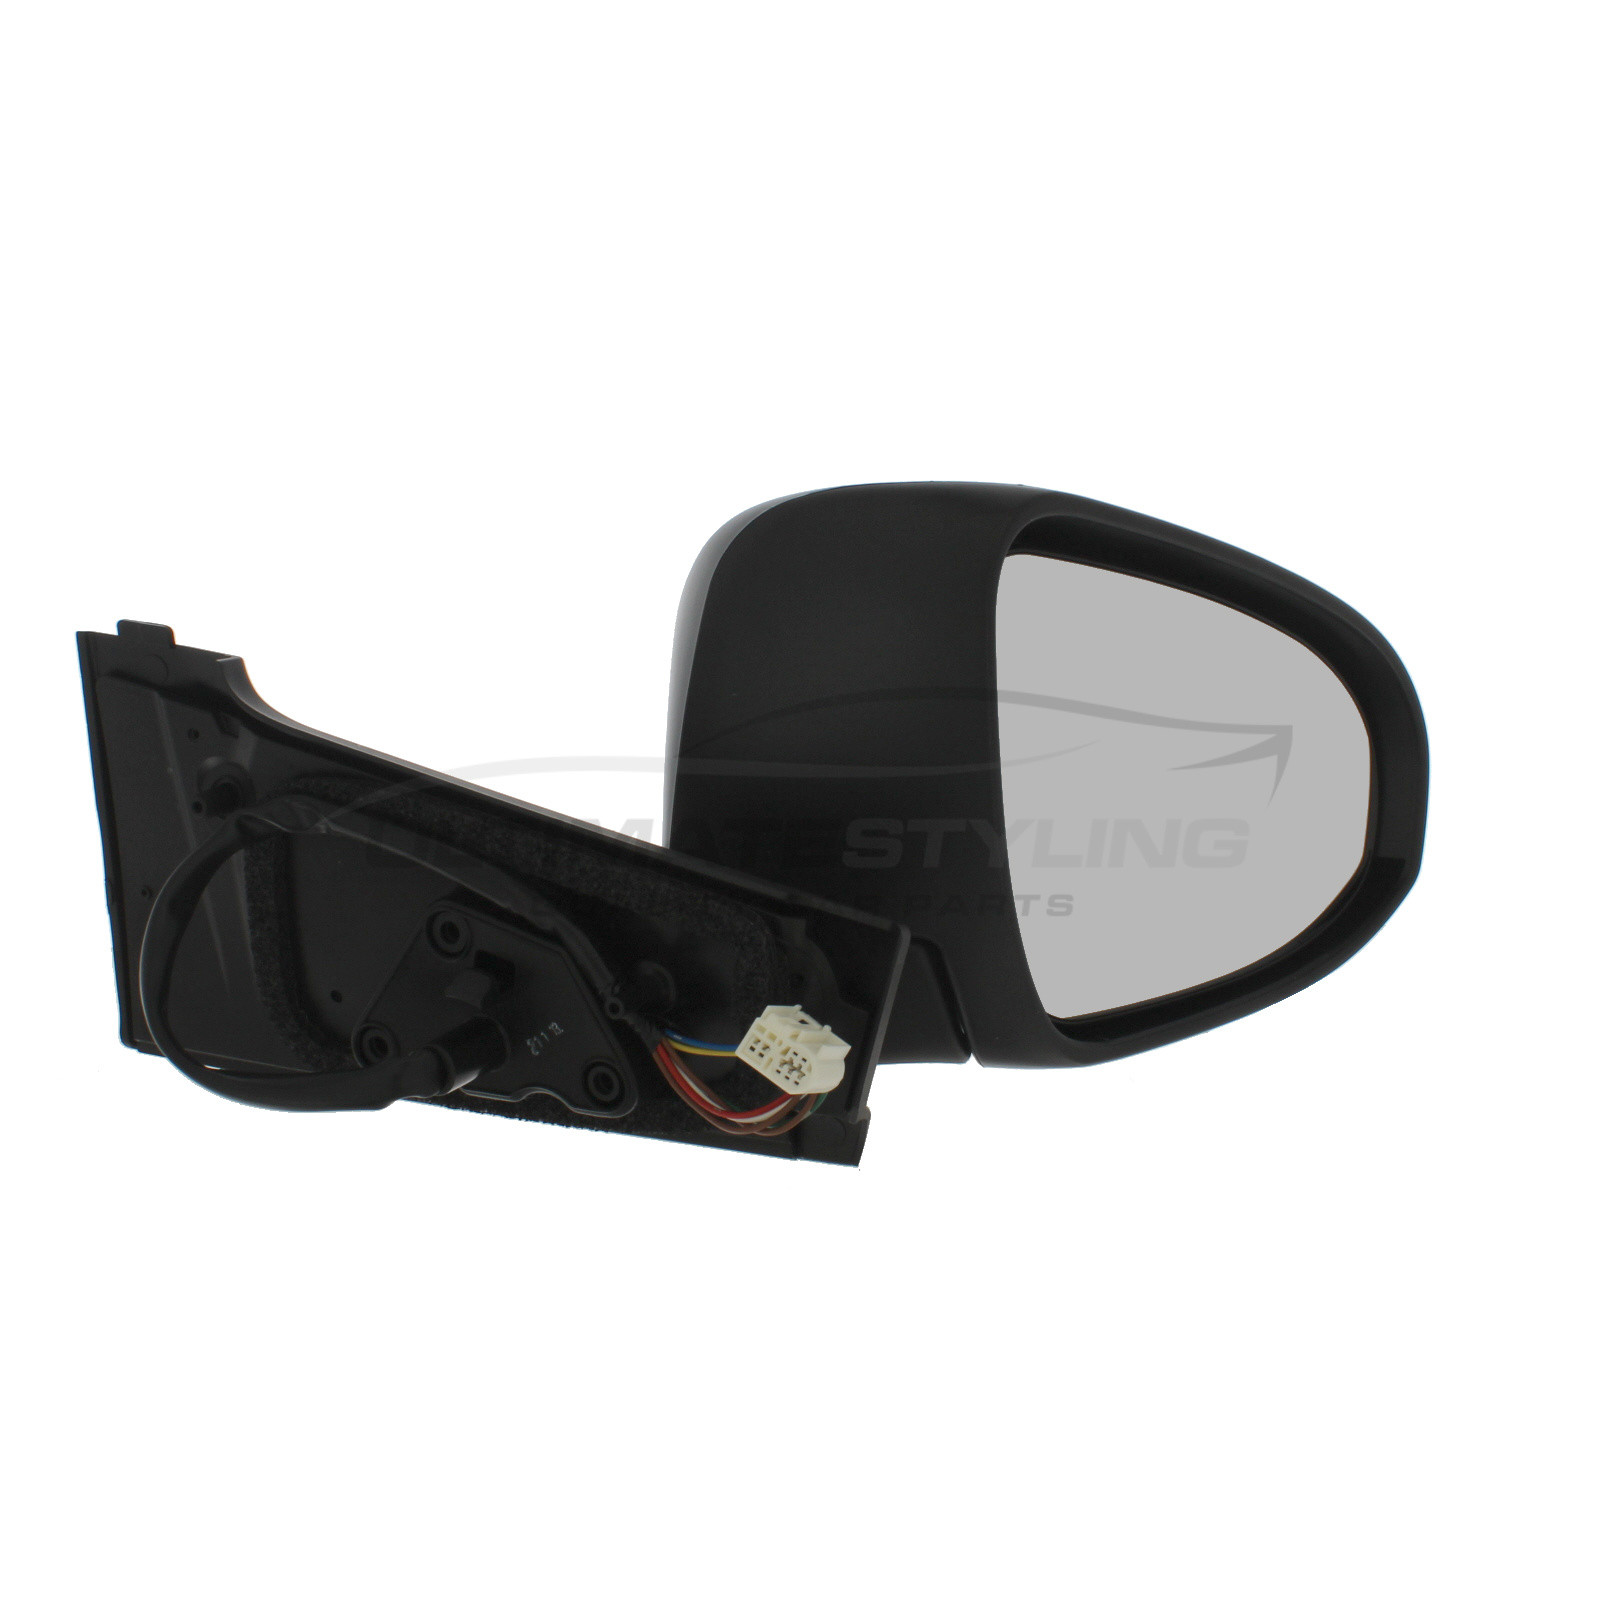 Toyota Yaris Wing Mirror / Door Mirror - Drivers Side (RH) - Electric